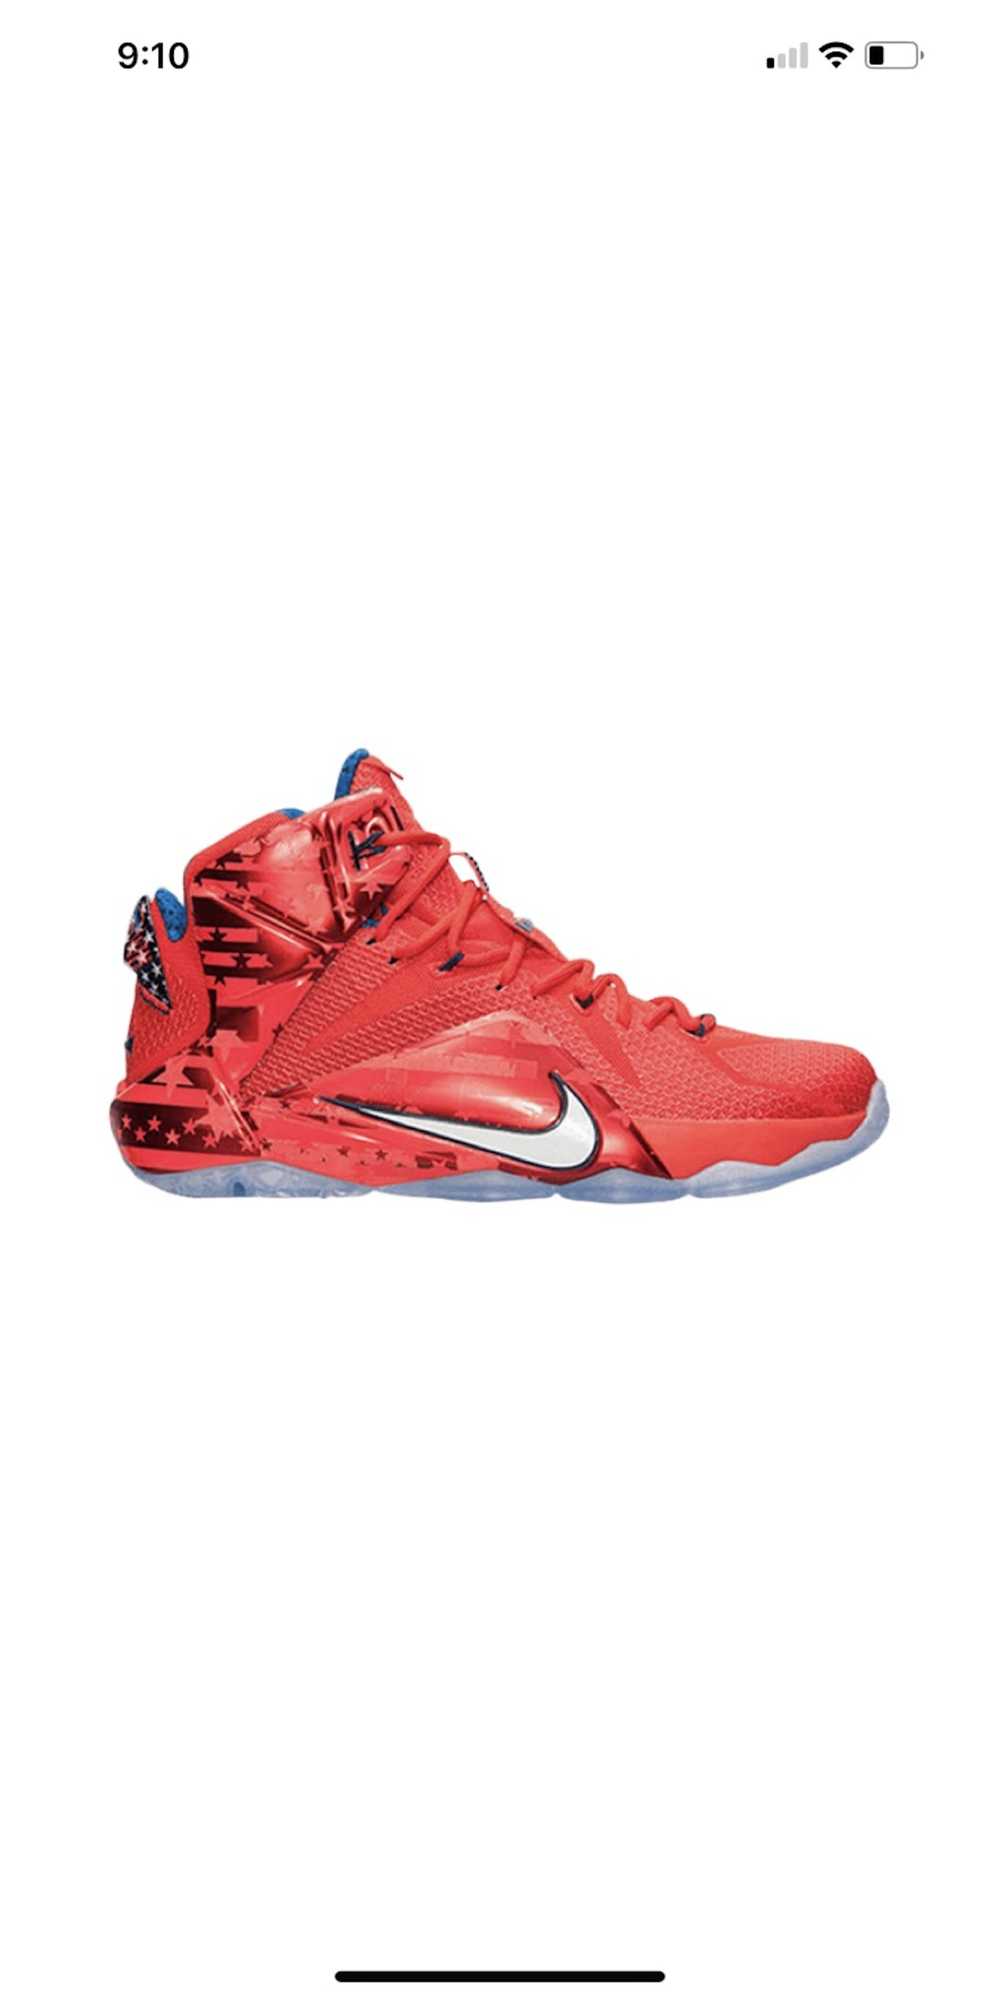 Nike LeBron 12 USA 2015 - image 1